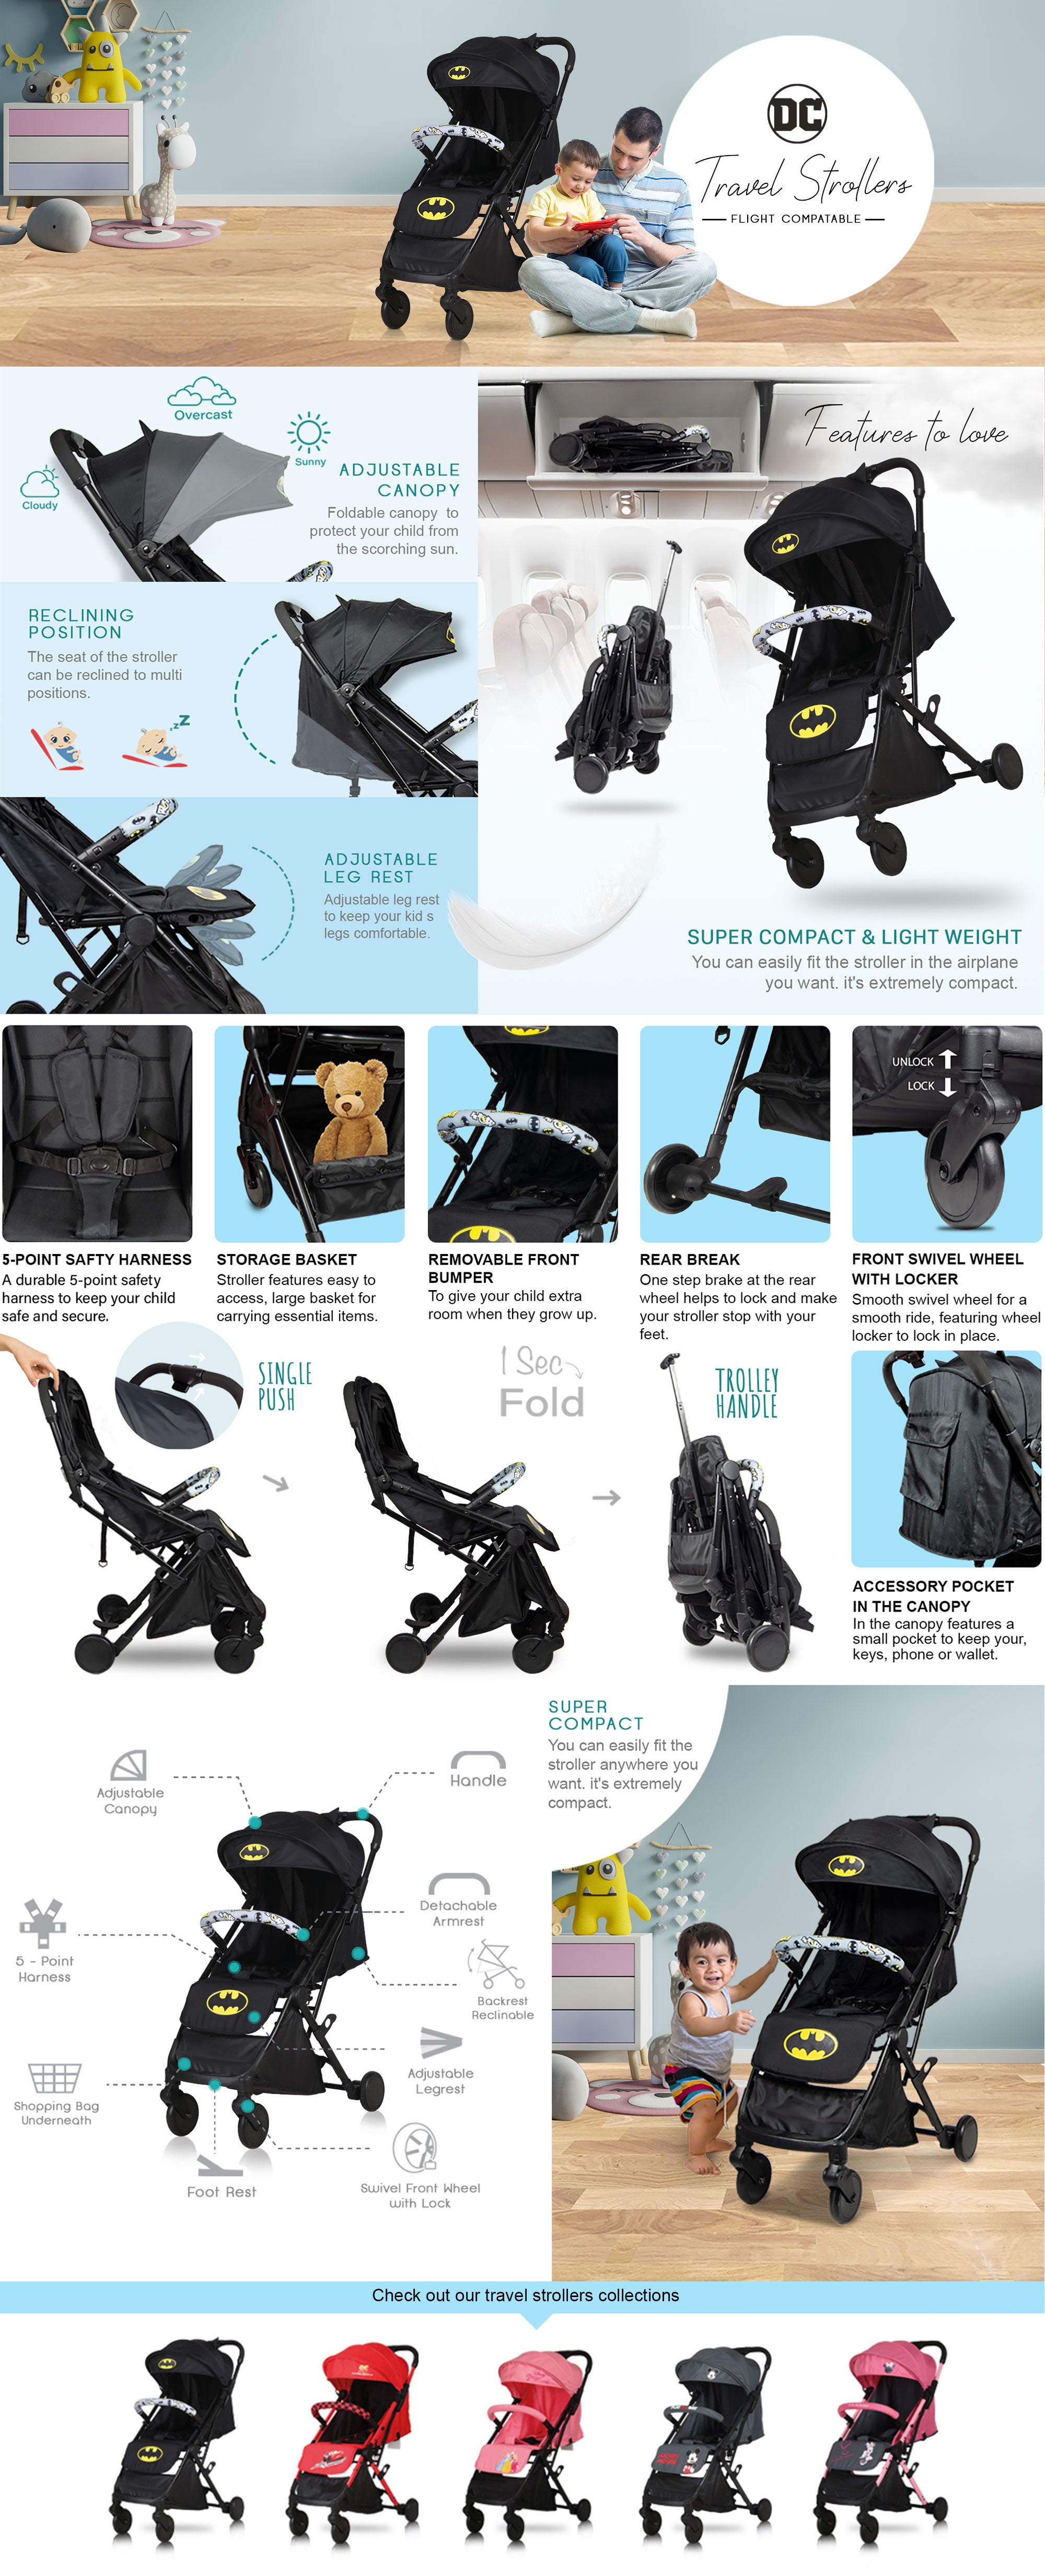 Batman Travel Stroller 0 - 36 Months, Compact Design, Storage Basket, Rear Breaks, Travel Compatible, Trolley Handle